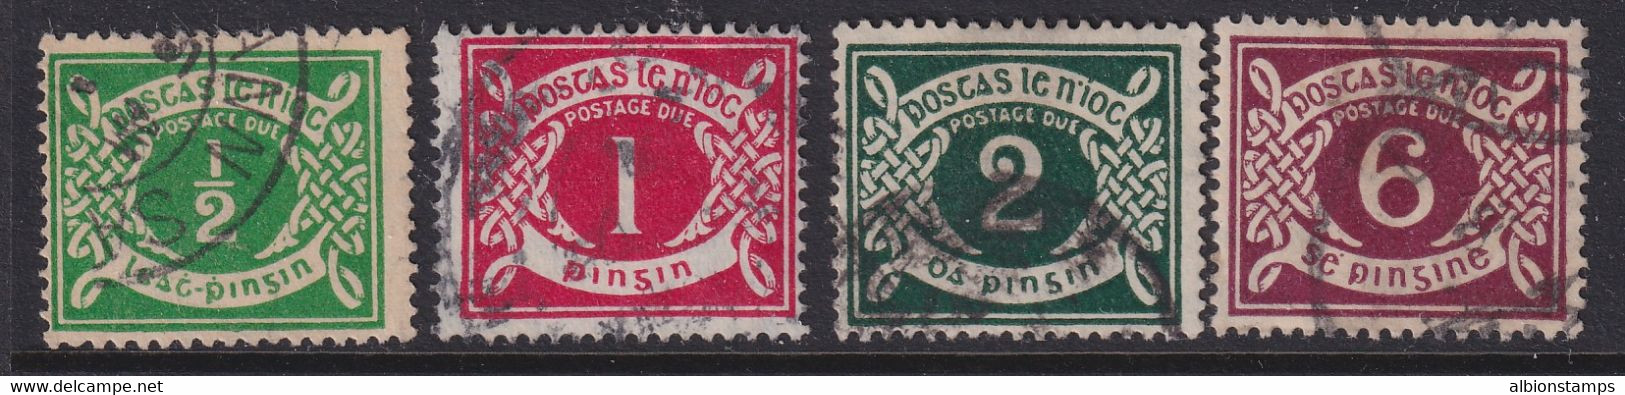 Ireland, Scott J1-J4 (SG D1-D4), Used - Postage Due